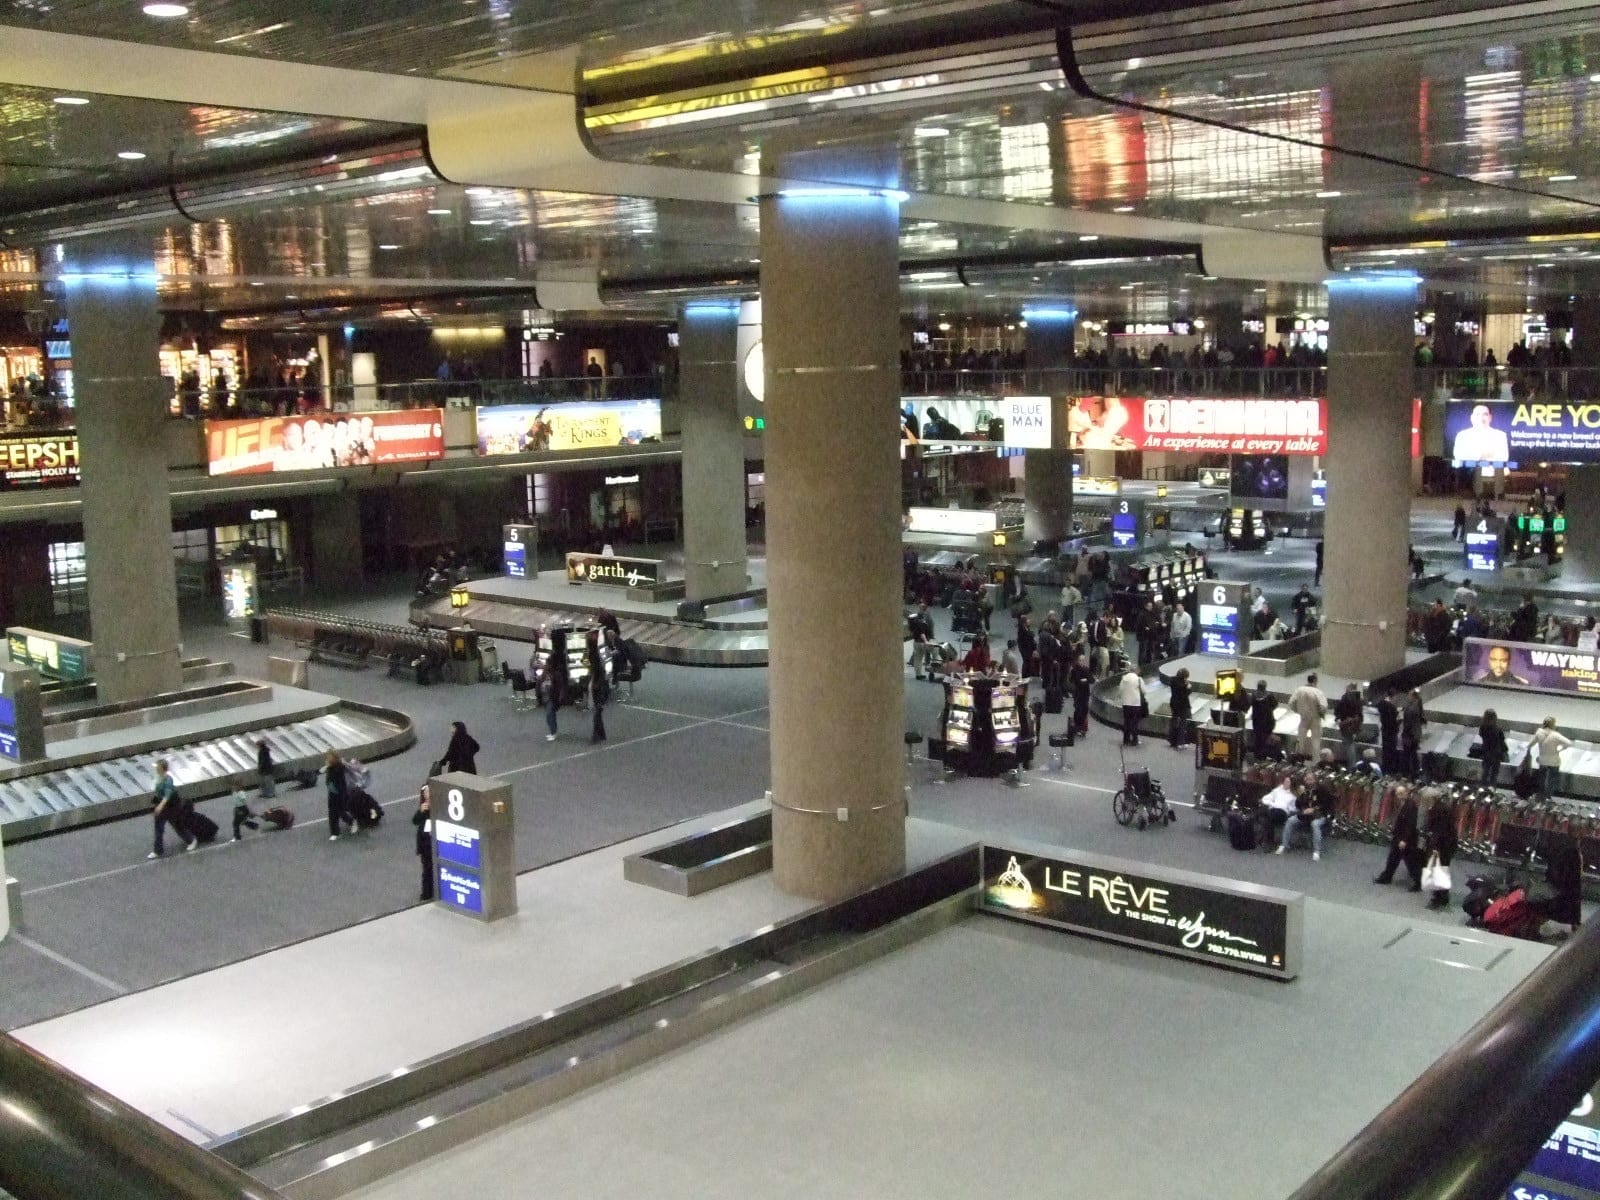 LAS Airport, Las Vegas McCarran Baggage Claim; image by Joseph Hunkins, via Flickr, CC BY 2.0, no changes.